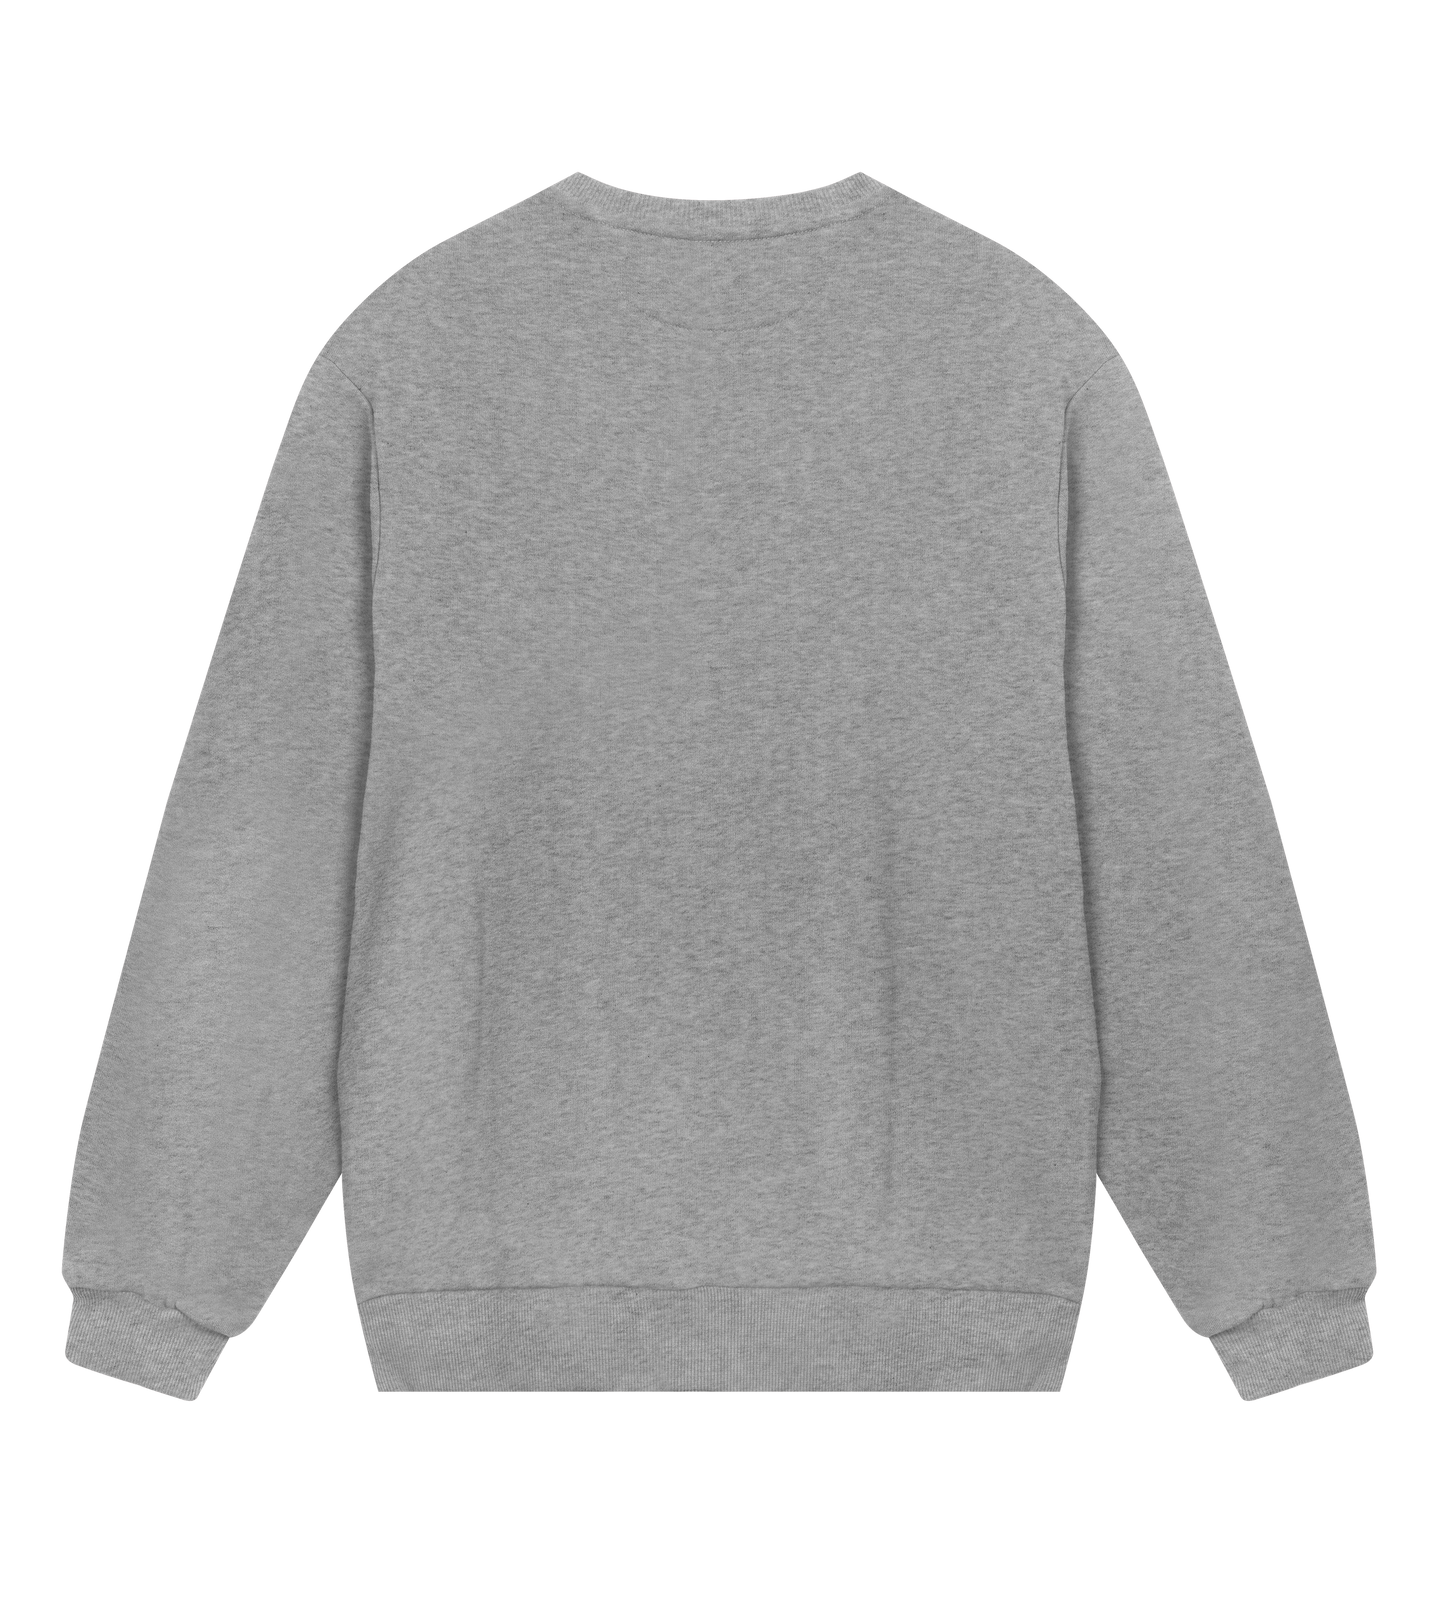 Common Ground "CG" Sweater